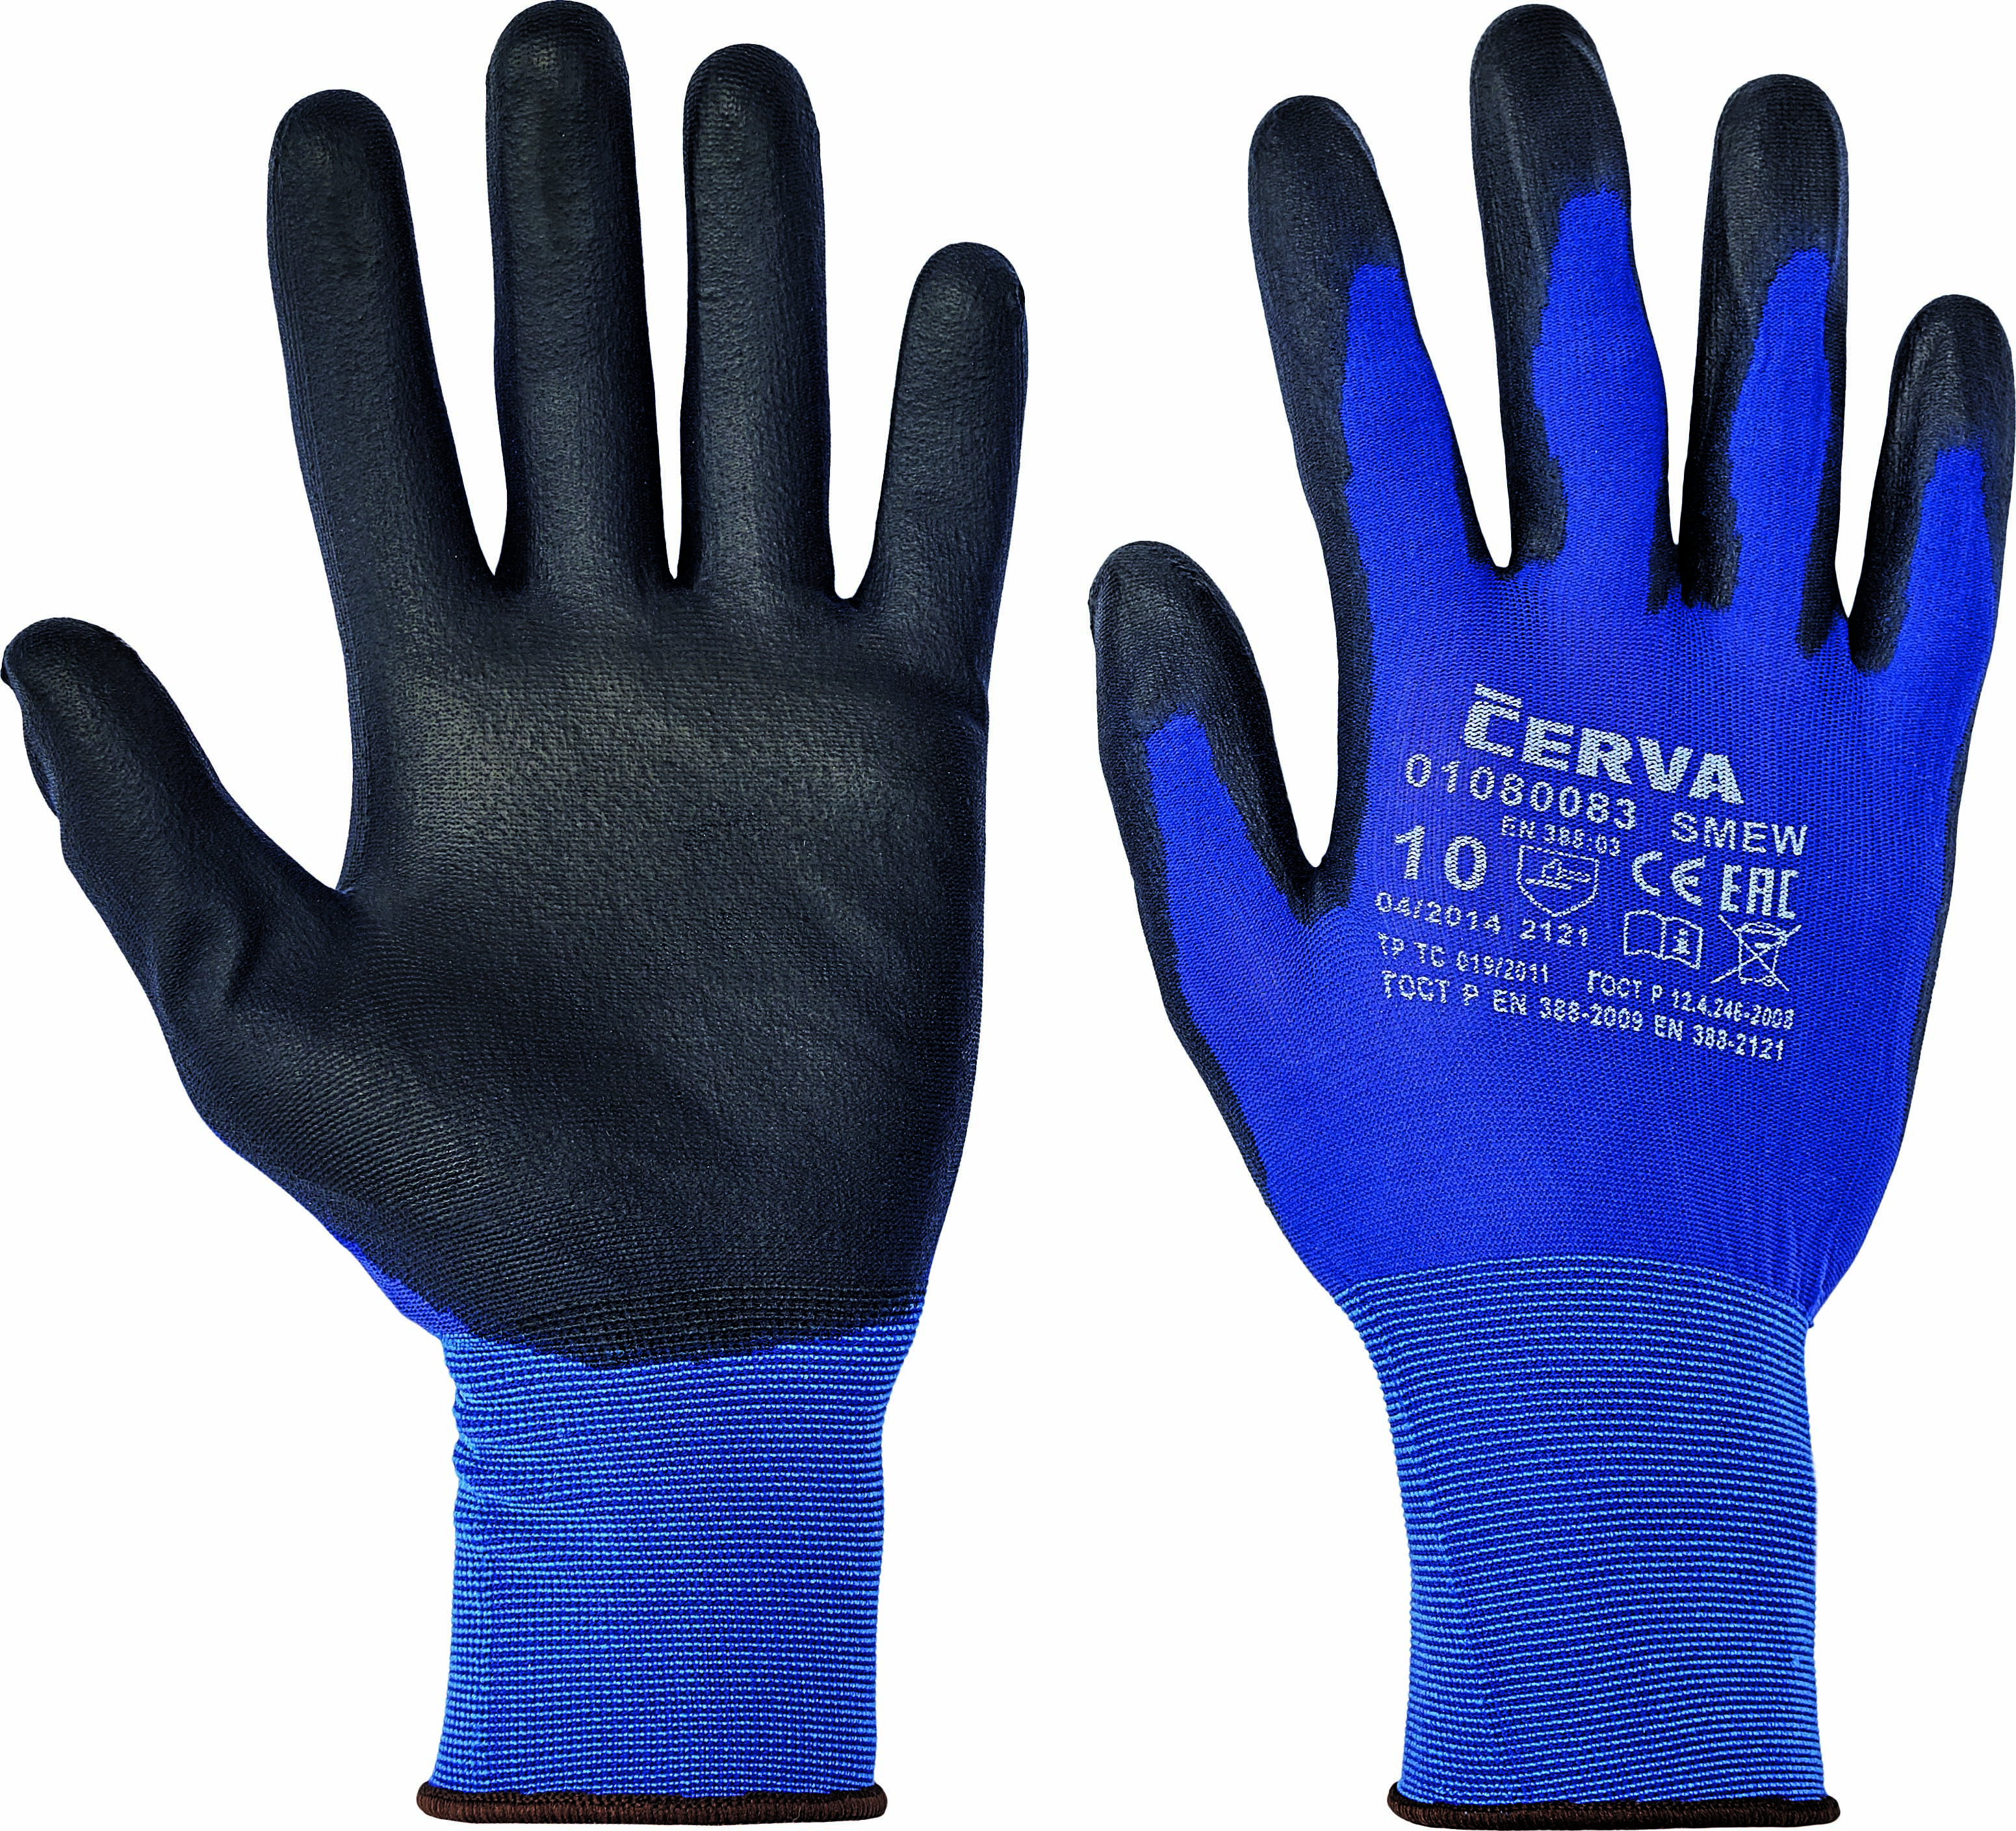 SMEW gloves